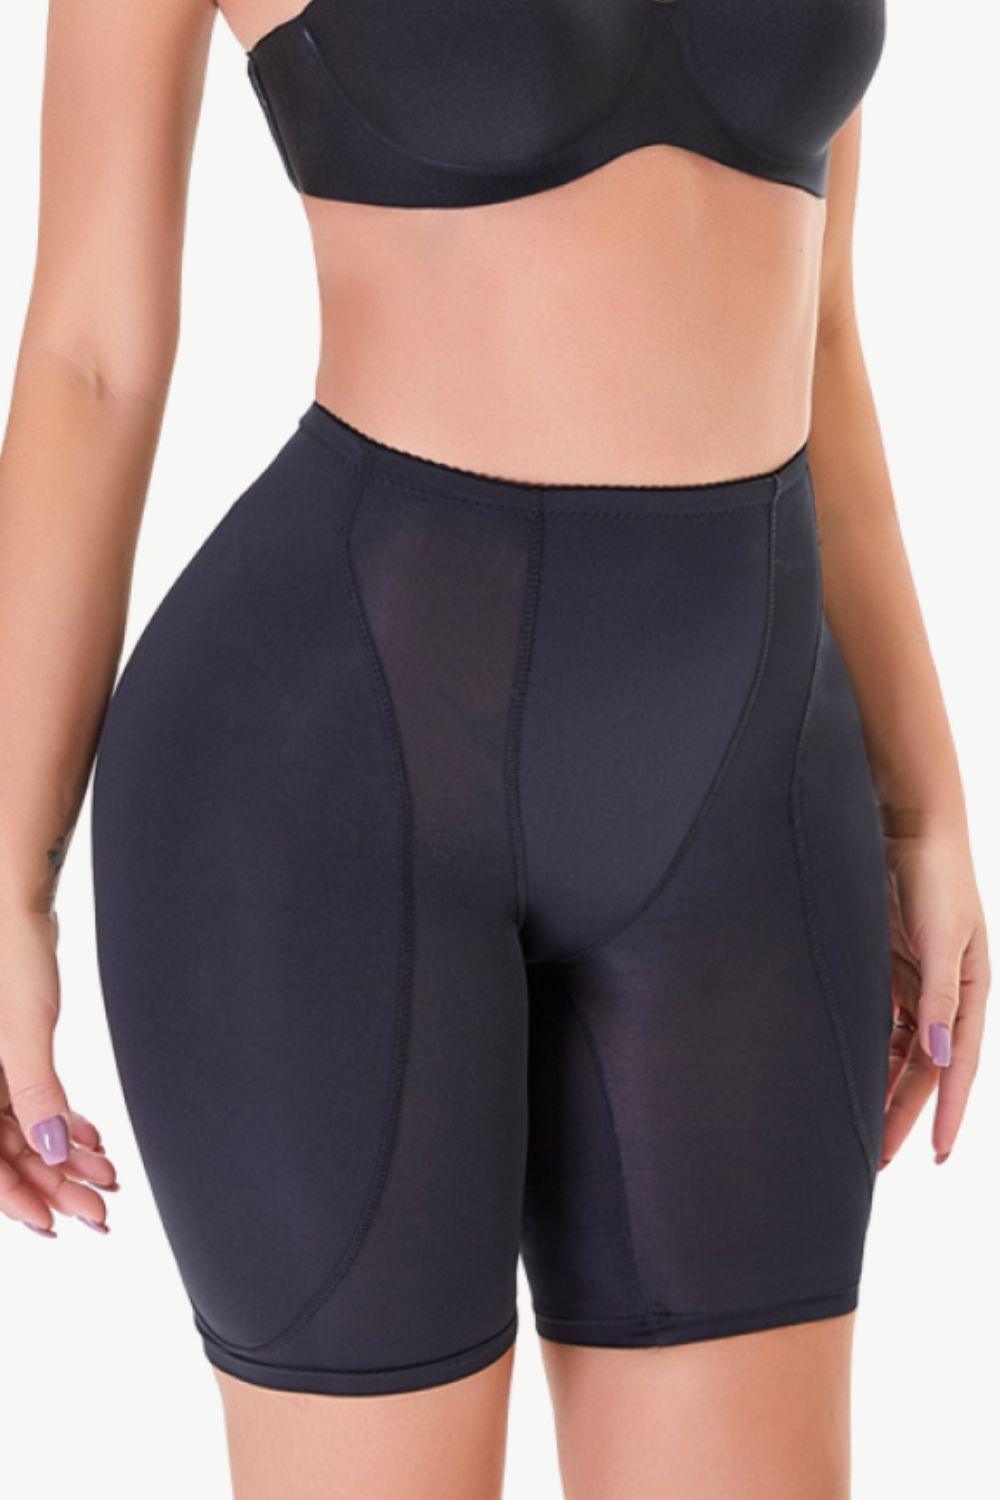 Butt Lifter Hip Enhancer Body Shaping Shorts - MXSTUDIO.COM